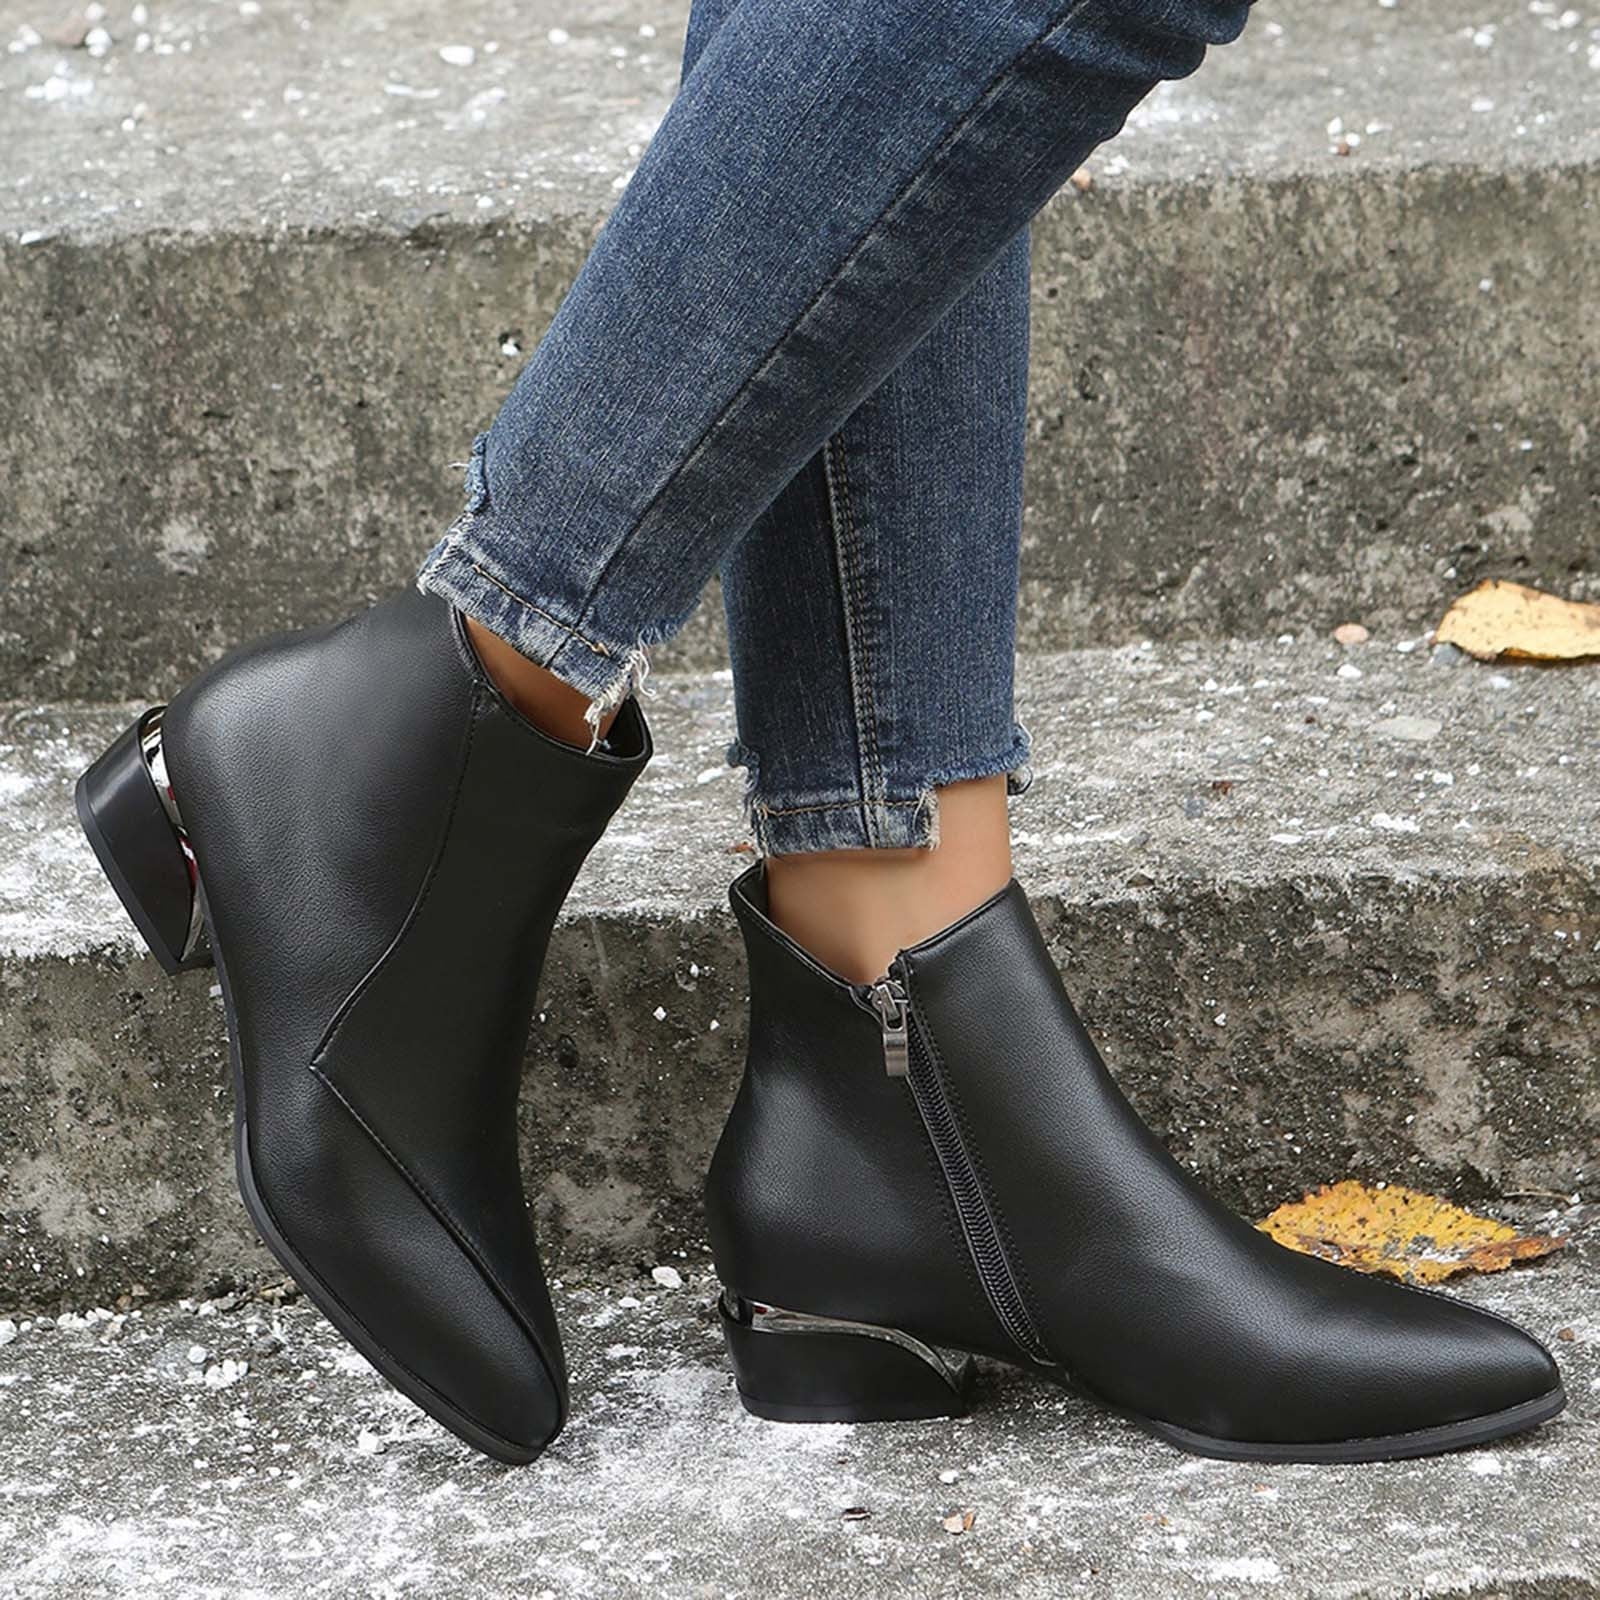 Women High Heel Boots Size 6 1/2 Medium By Marshalls 206-W18271SM MINT |  eBay